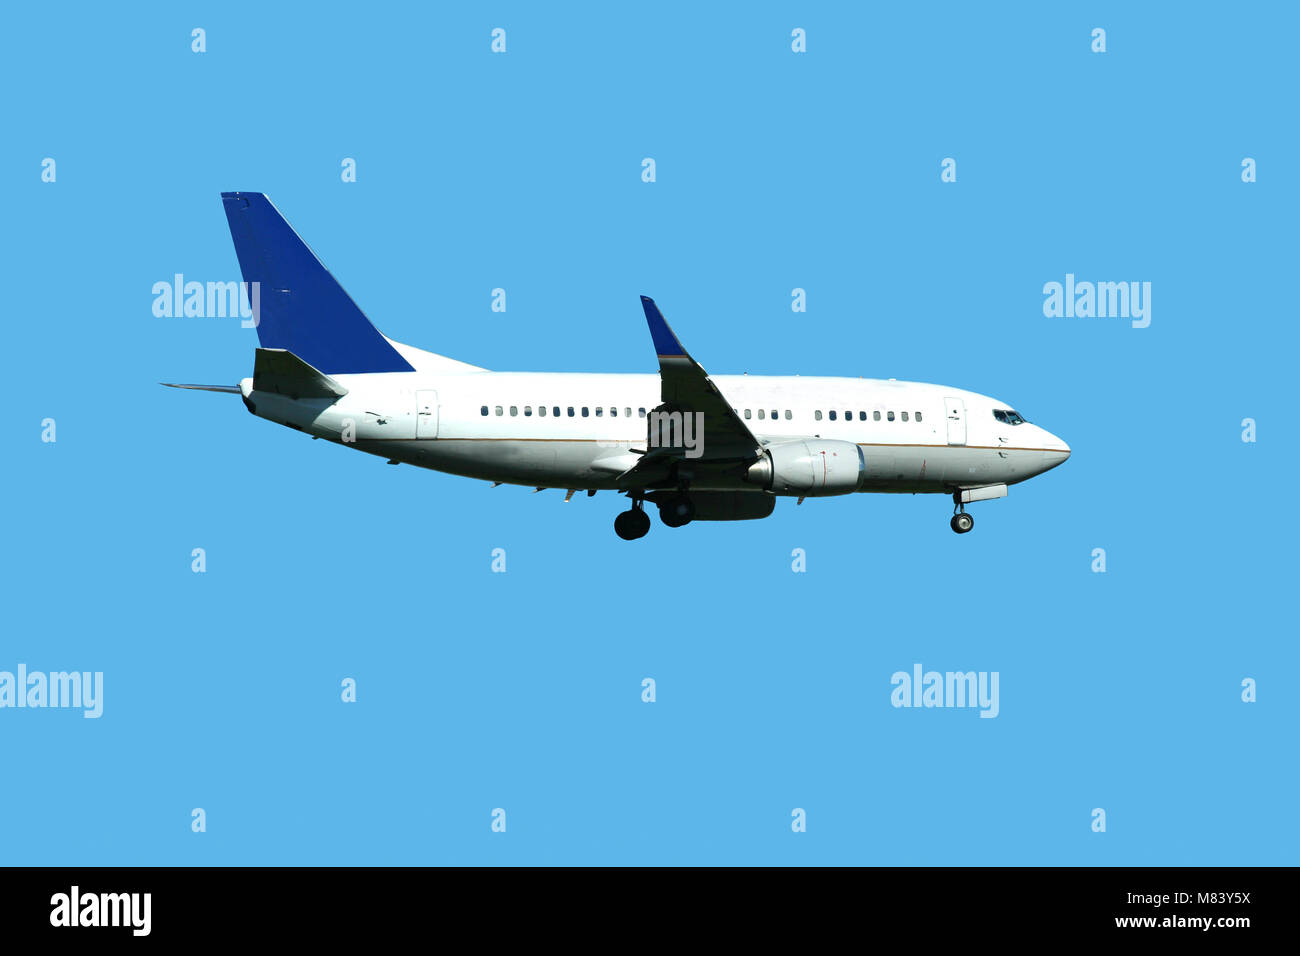 A Passenger jet plane landing Stock Photo